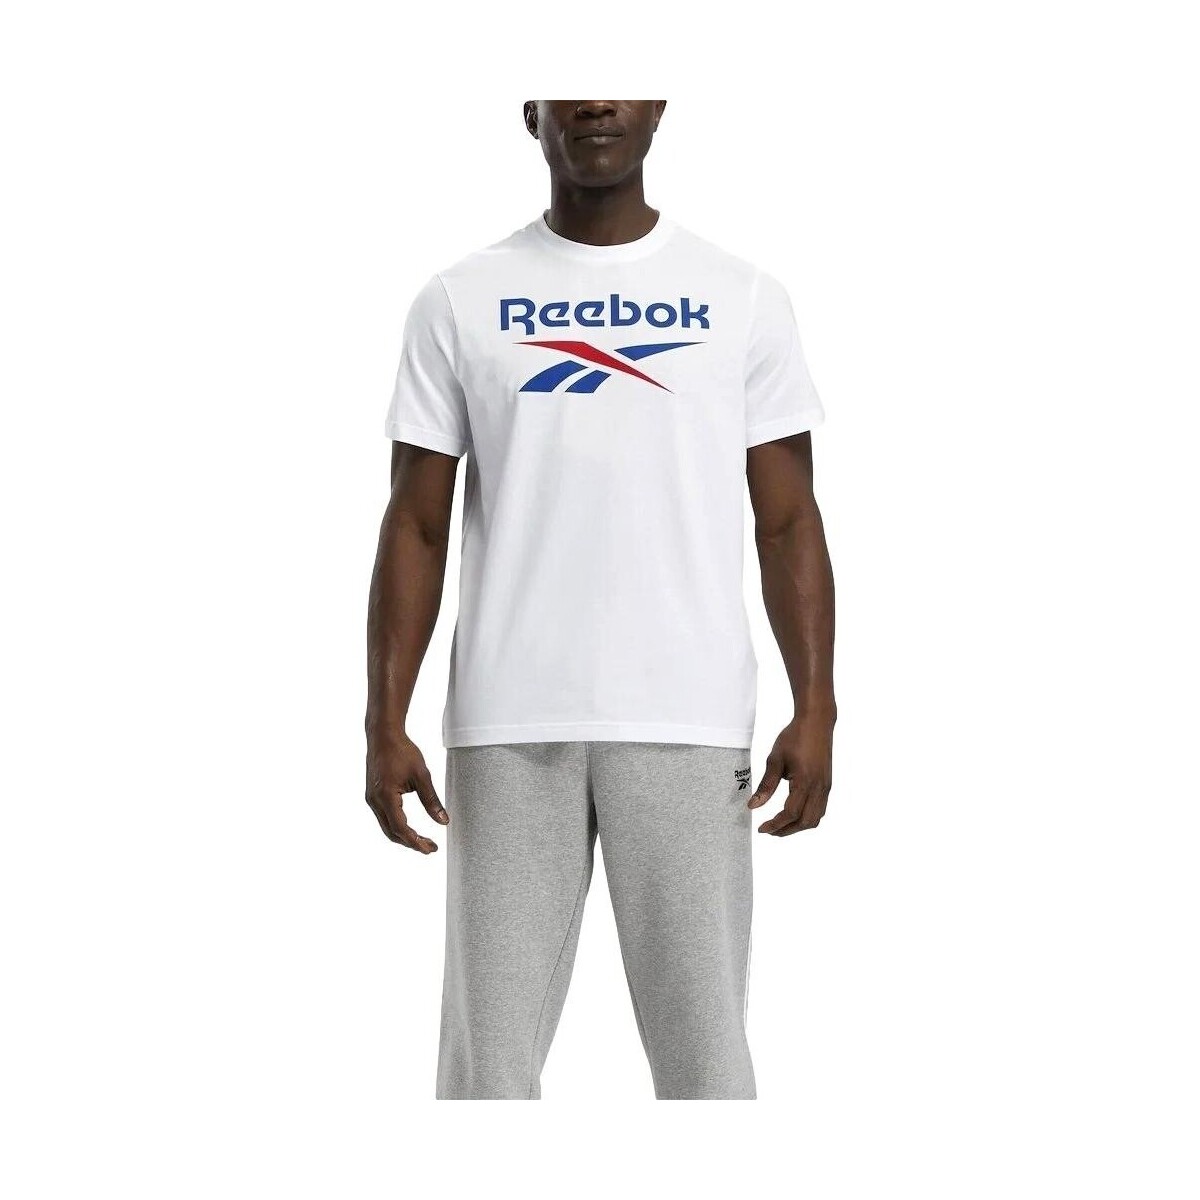 Textiel Heren T-shirts korte mouwen Reebok Sport CAMISETA HOMBRE  100071175-WHITE Wit